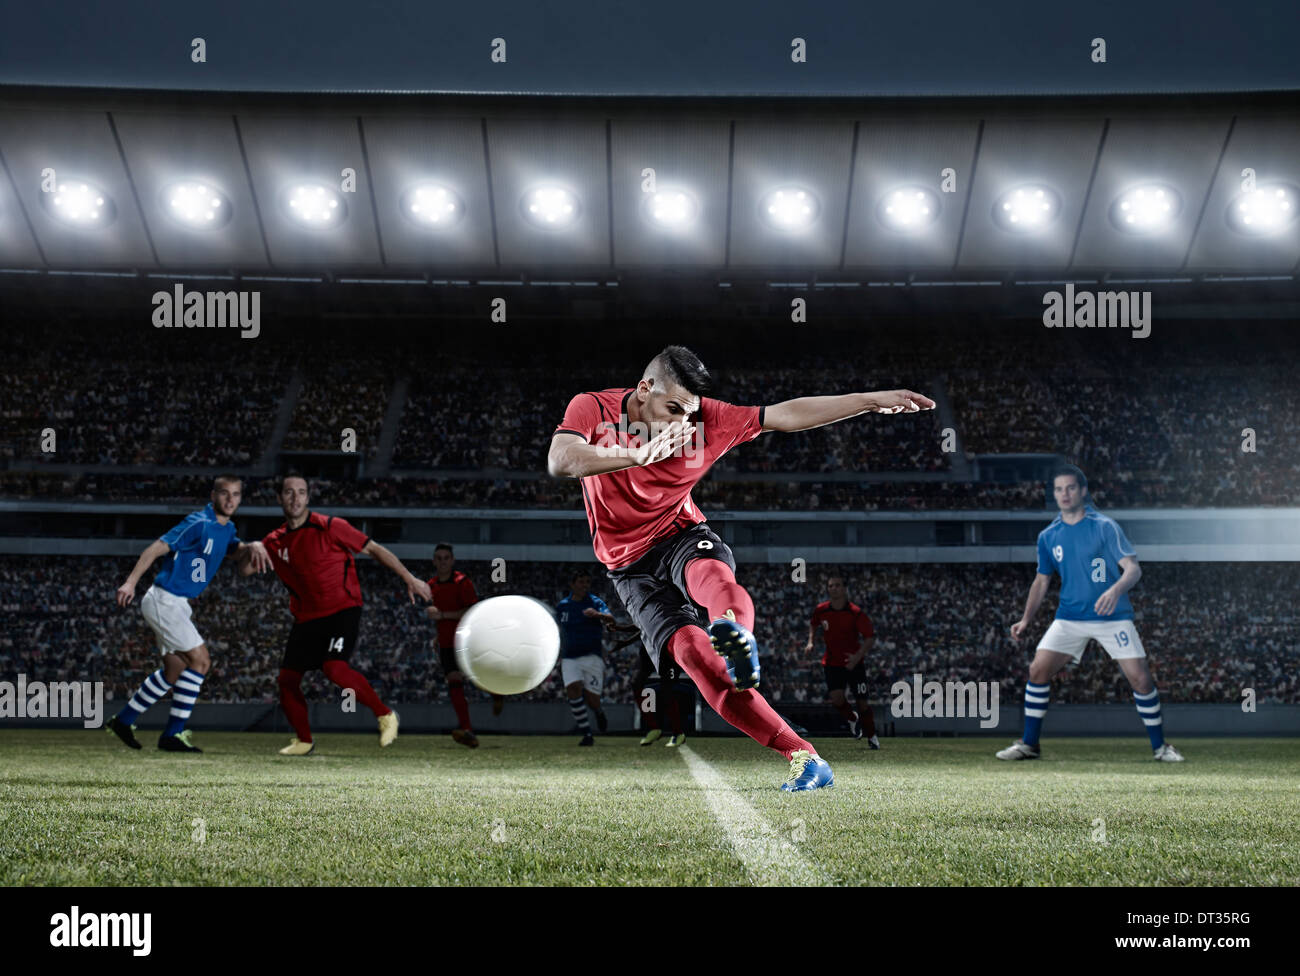 Soccer player kicking ball on field Stock Photo